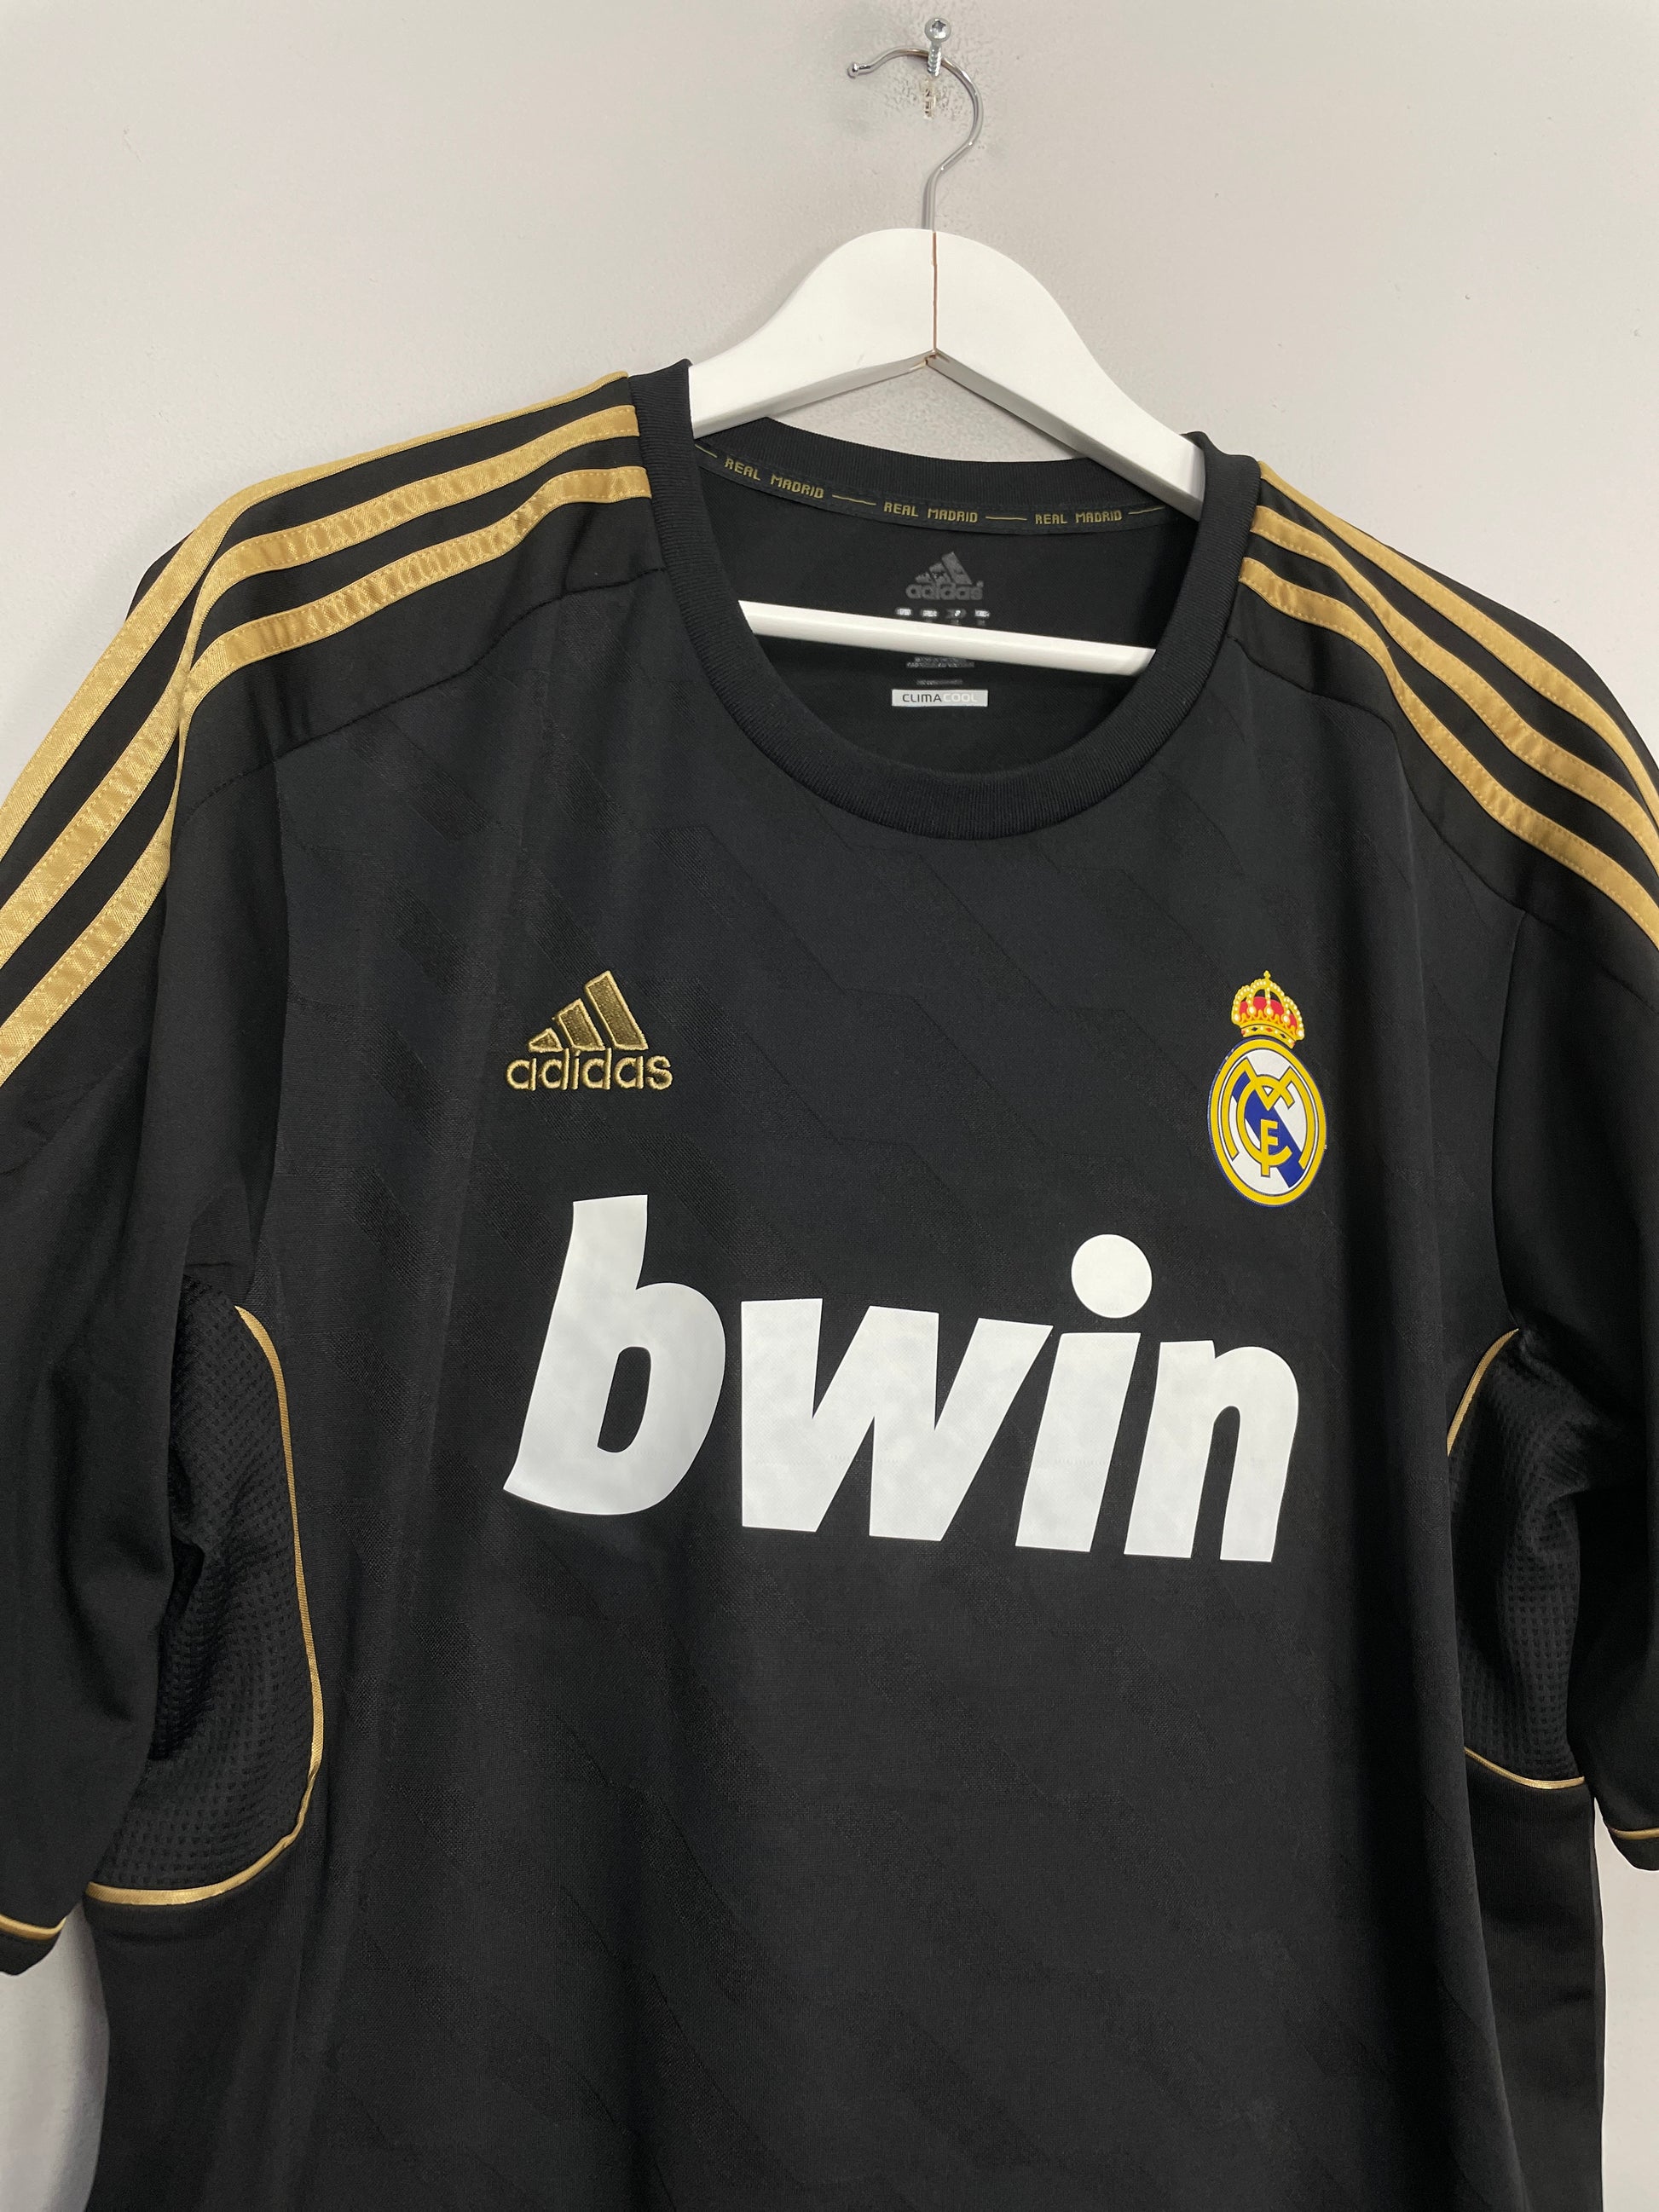 Camiseta Real Madrid 2011-2012 negra retro Cristiano Ronaldo